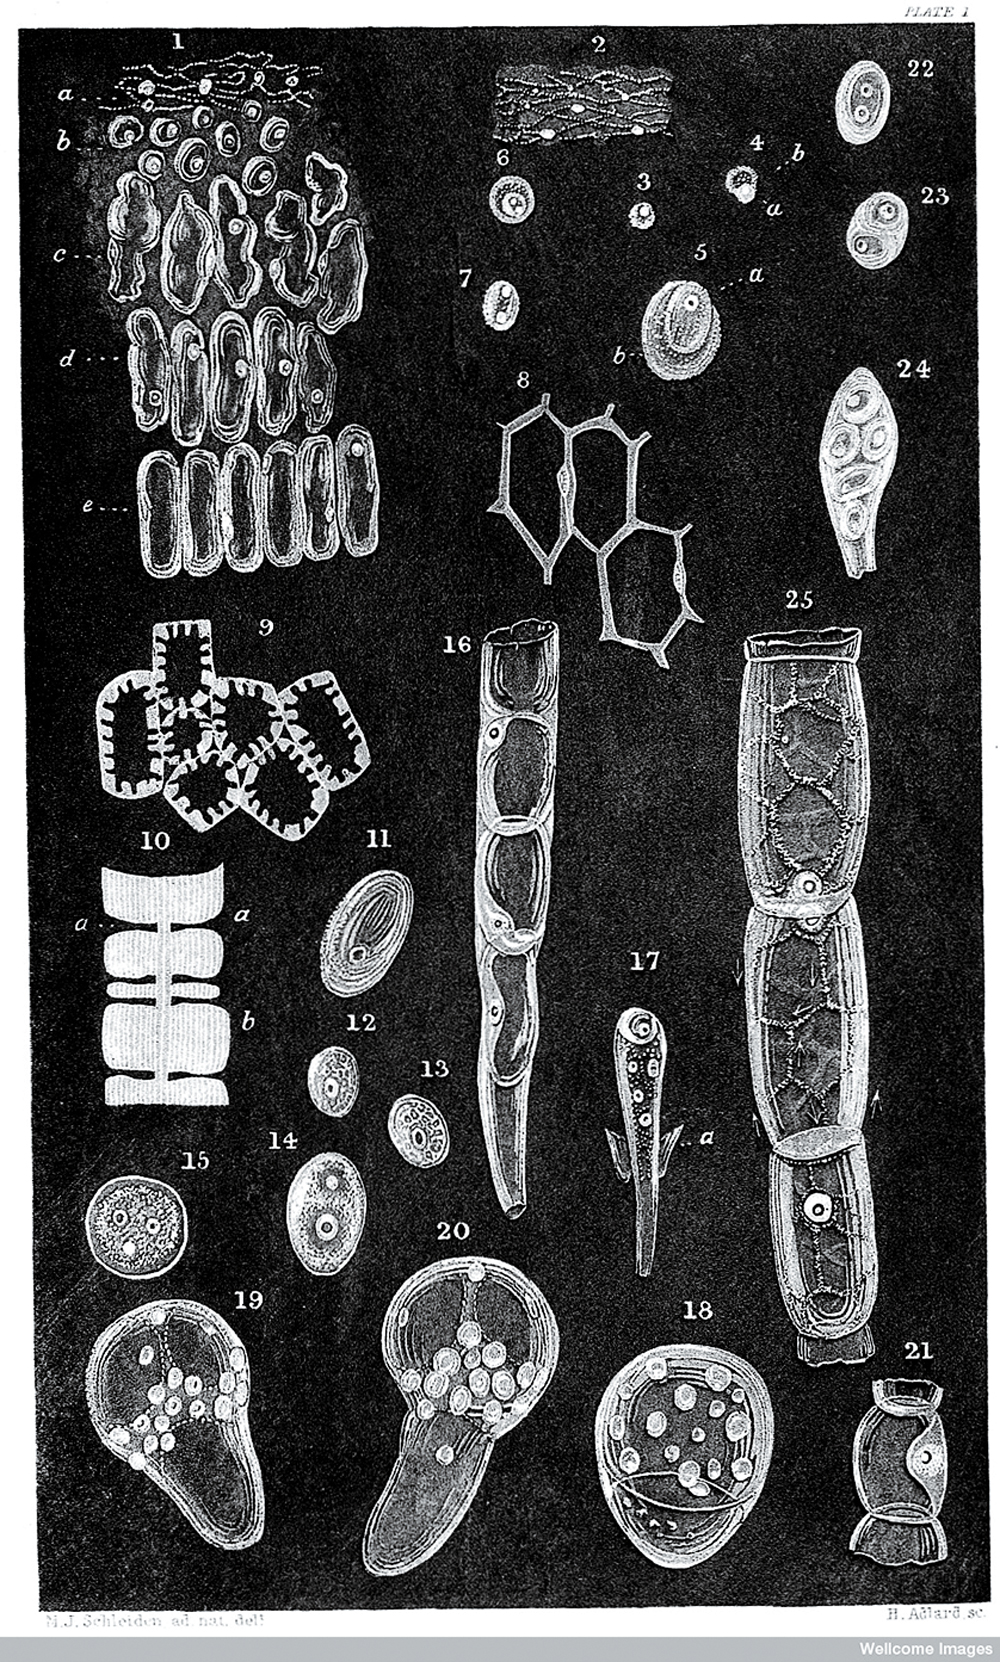 Sketches of animal cells (Theodor Schwann, 1839).